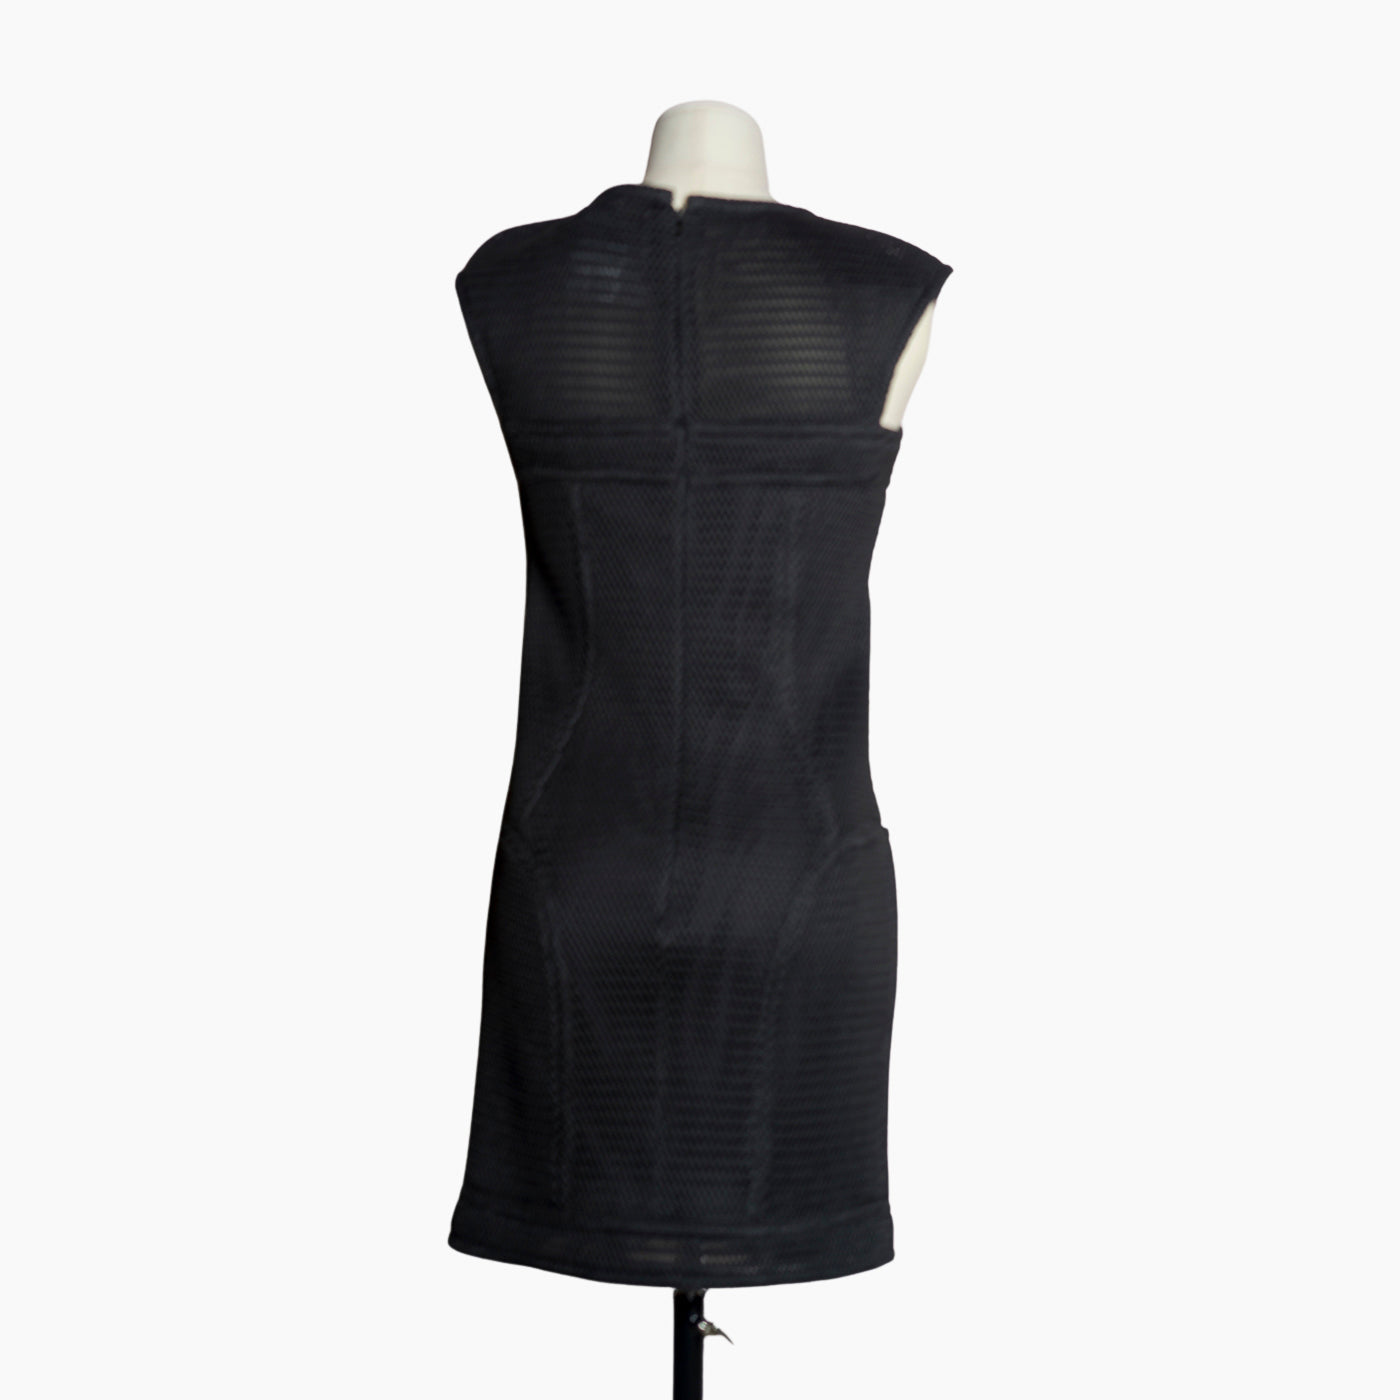 Lysis vintage Chanel dress - S - 2020s